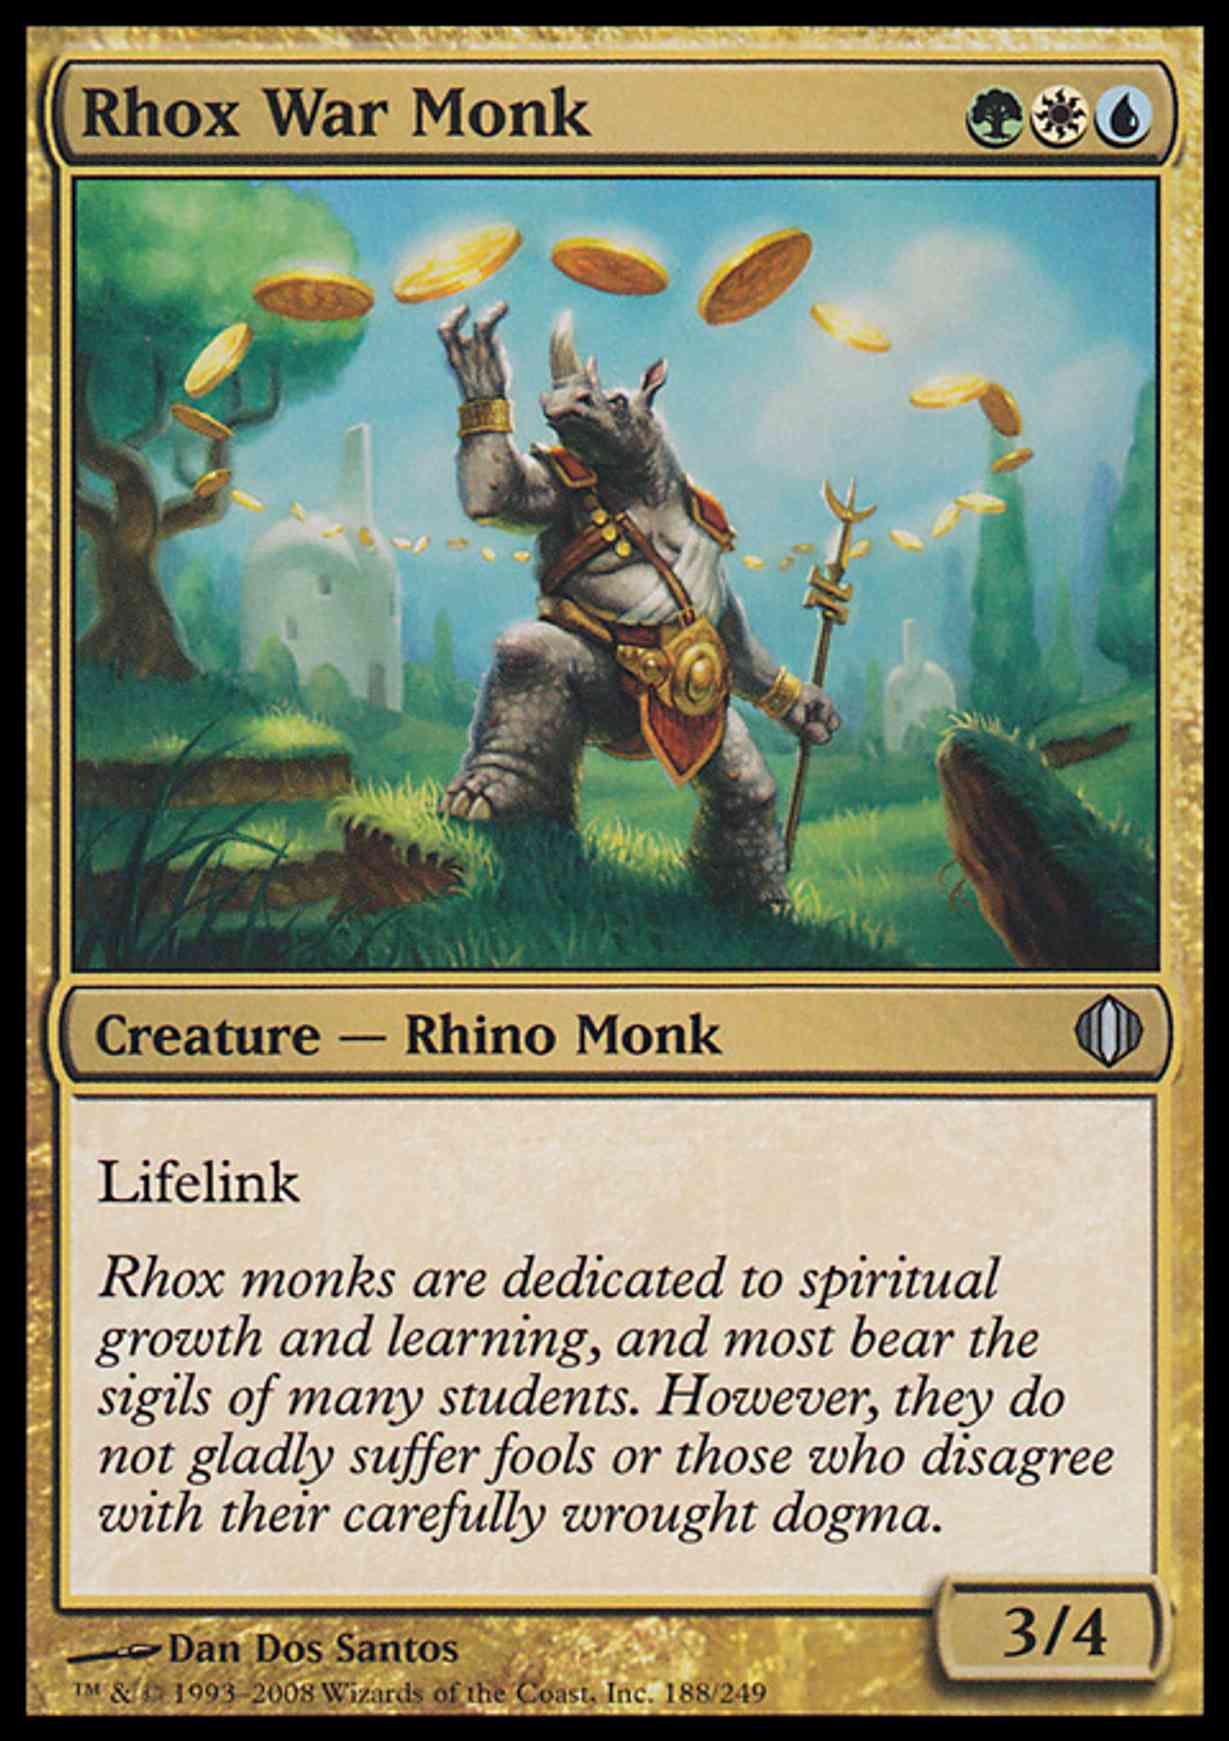 Rhox War Monk magic card front